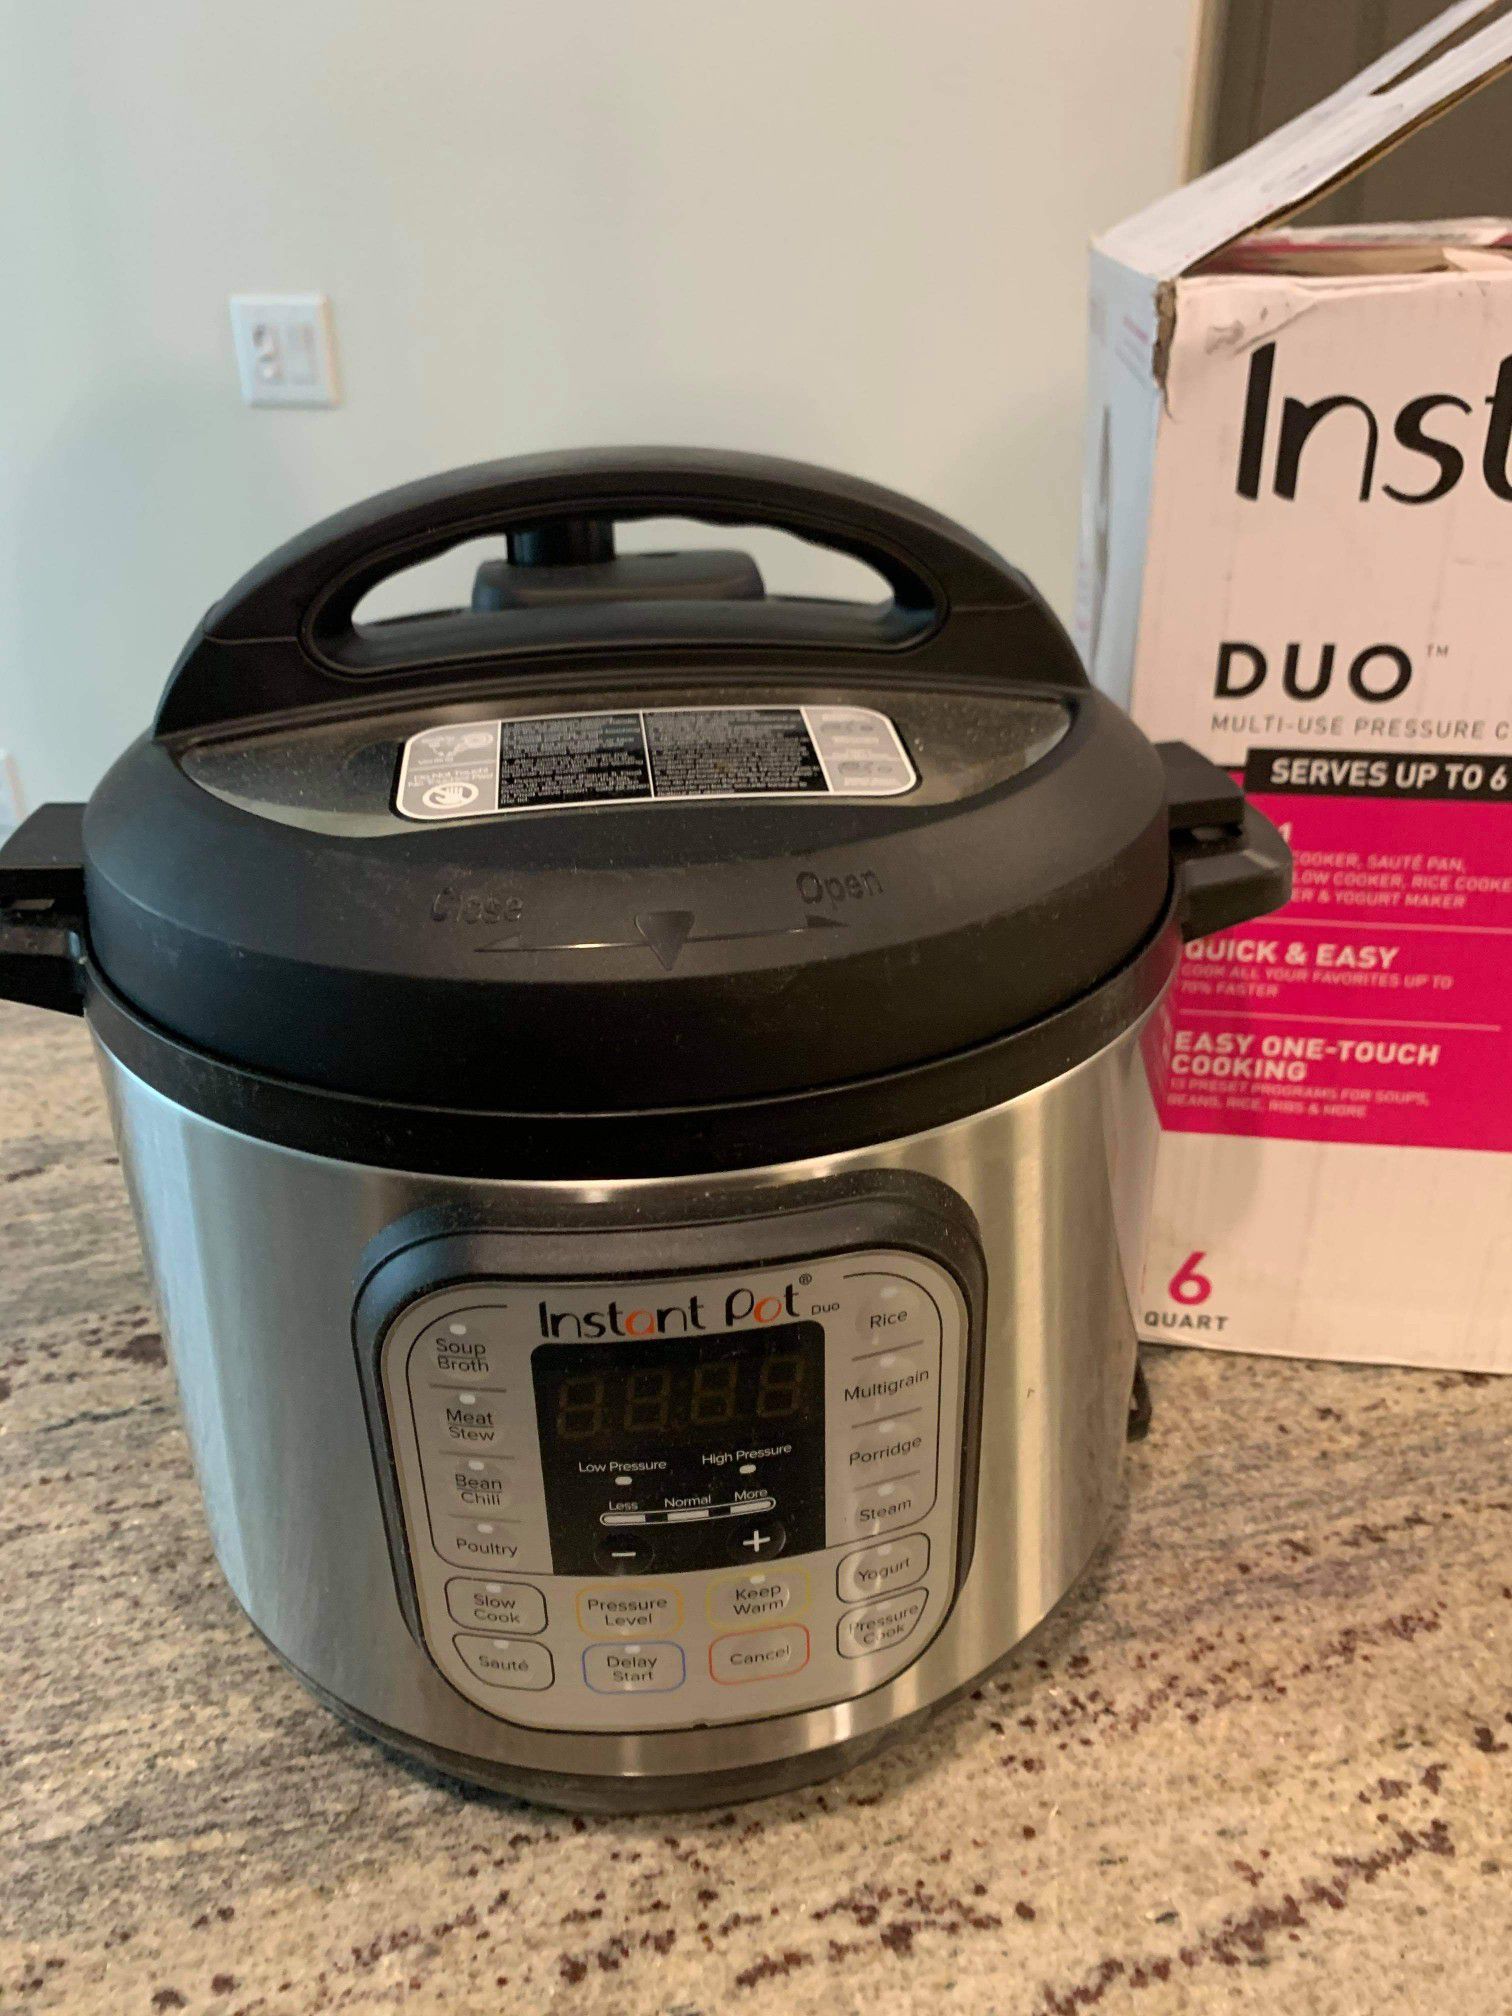 Instant Pot Duo 7-in-1 Electric Pressure Cooker, Sterilizer, Slow Cooker, Roce Cooker, Steamer, Saute, Yogurt Maker and Warmer